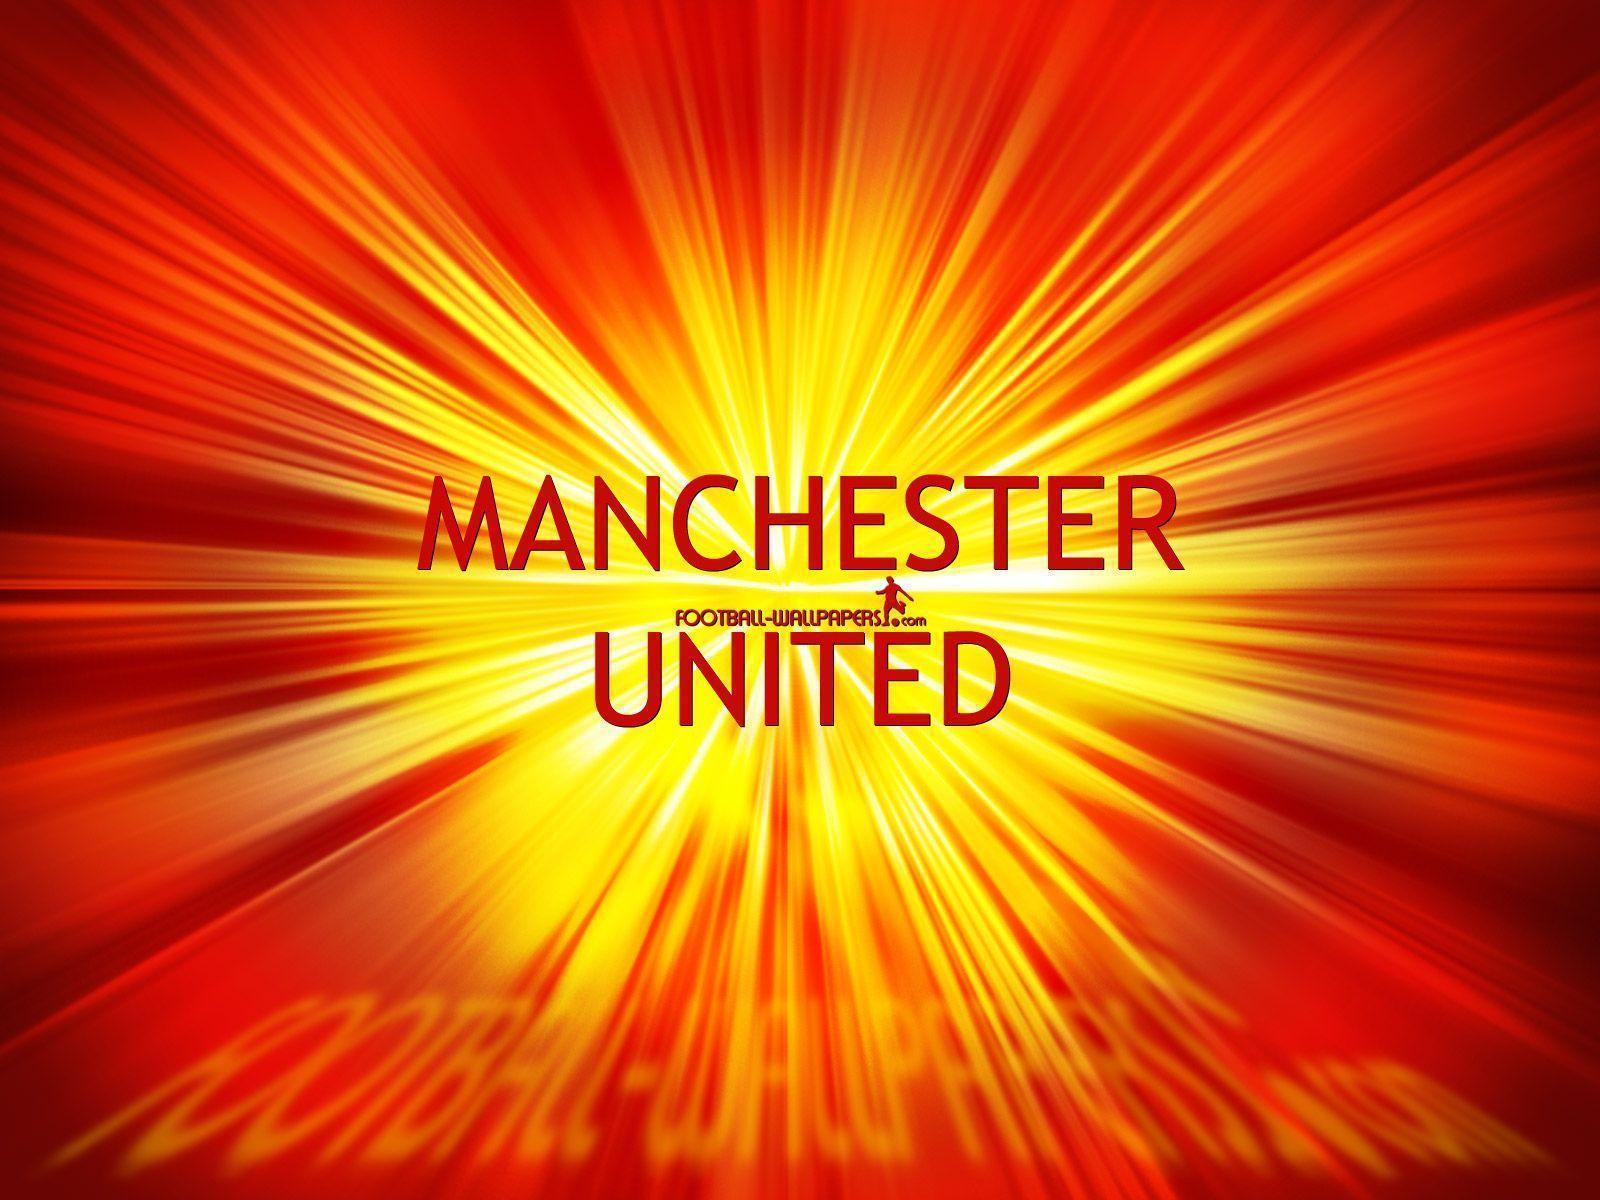 Manchester United Wallpaper. Football Wallpaper and Videos